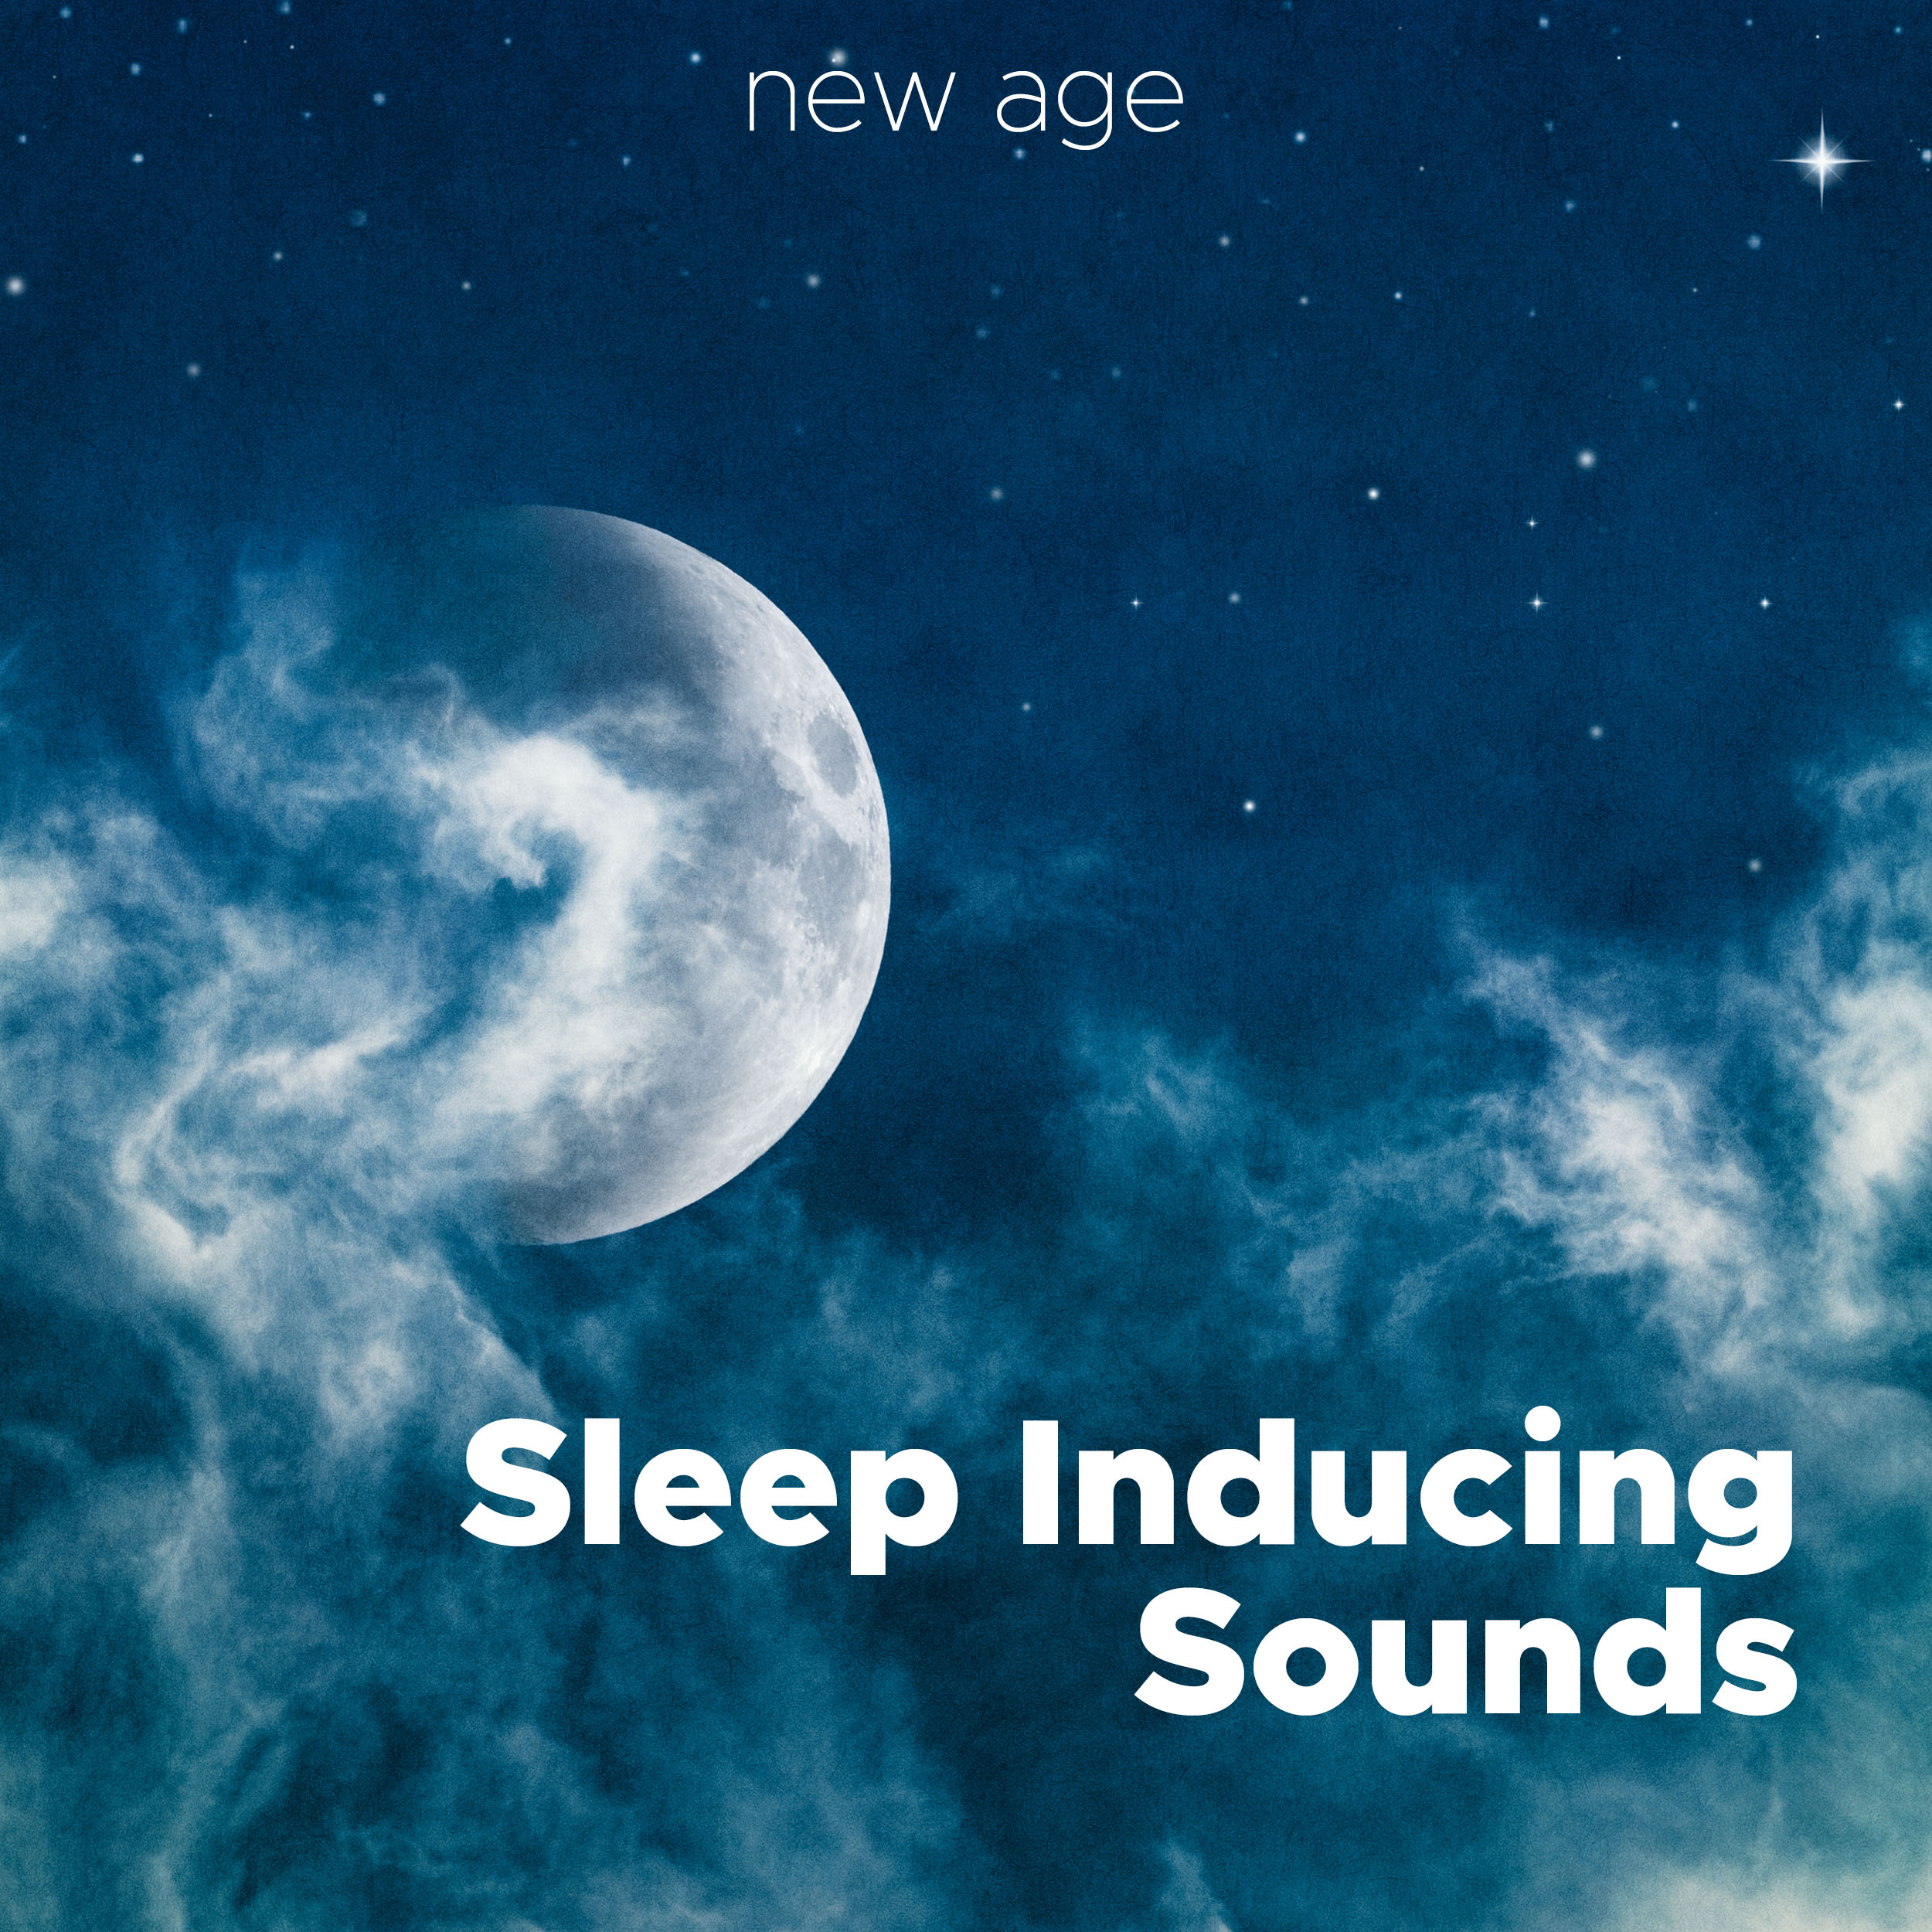 Sleep Inducing Sounds - Powerful Mental Massage Brain Music for Falling Asleep